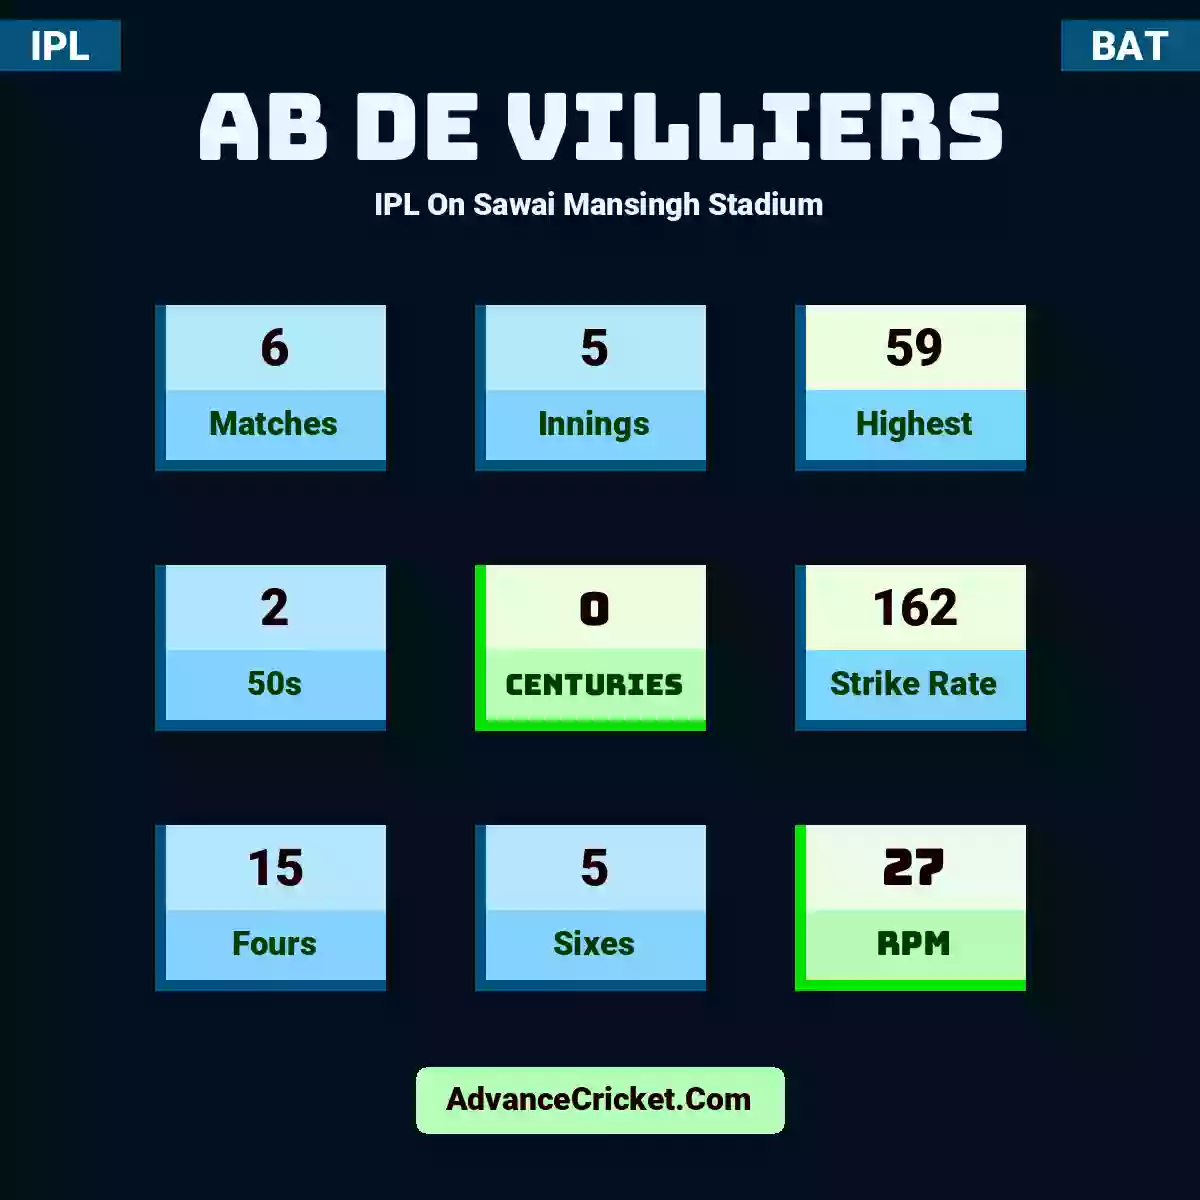 AB de Villiers IPL  On Sawai Mansingh Stadium, AB de Villiers played 6 matches, scored 59 runs as highest, 2 half-centuries, and 0 centuries, with a strike rate of 162. A.Villiers hit 15 fours and 5 sixes, with an RPM of 27.